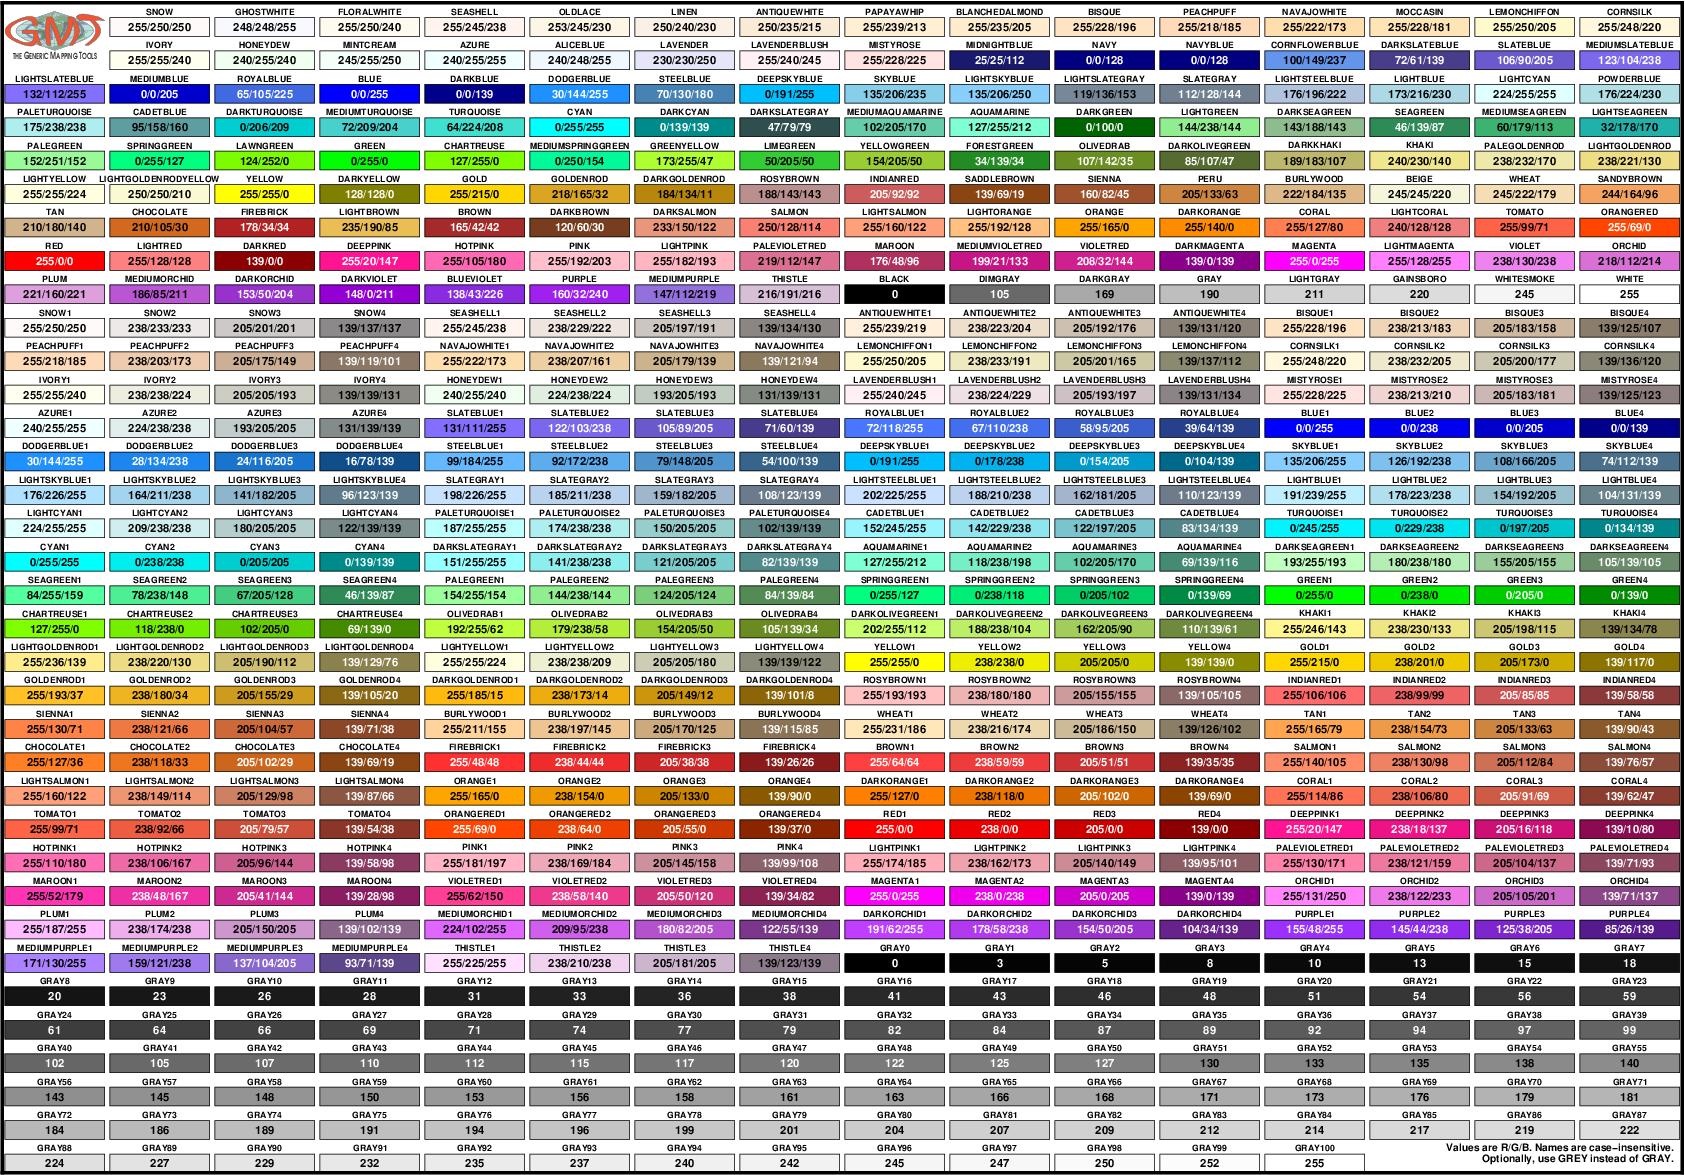 Color hex code. РГБ цвета коды. Таблица цветов RGB 255 255 255. Таблица коды РГБ цветов. Таблица цветов RGB 255.